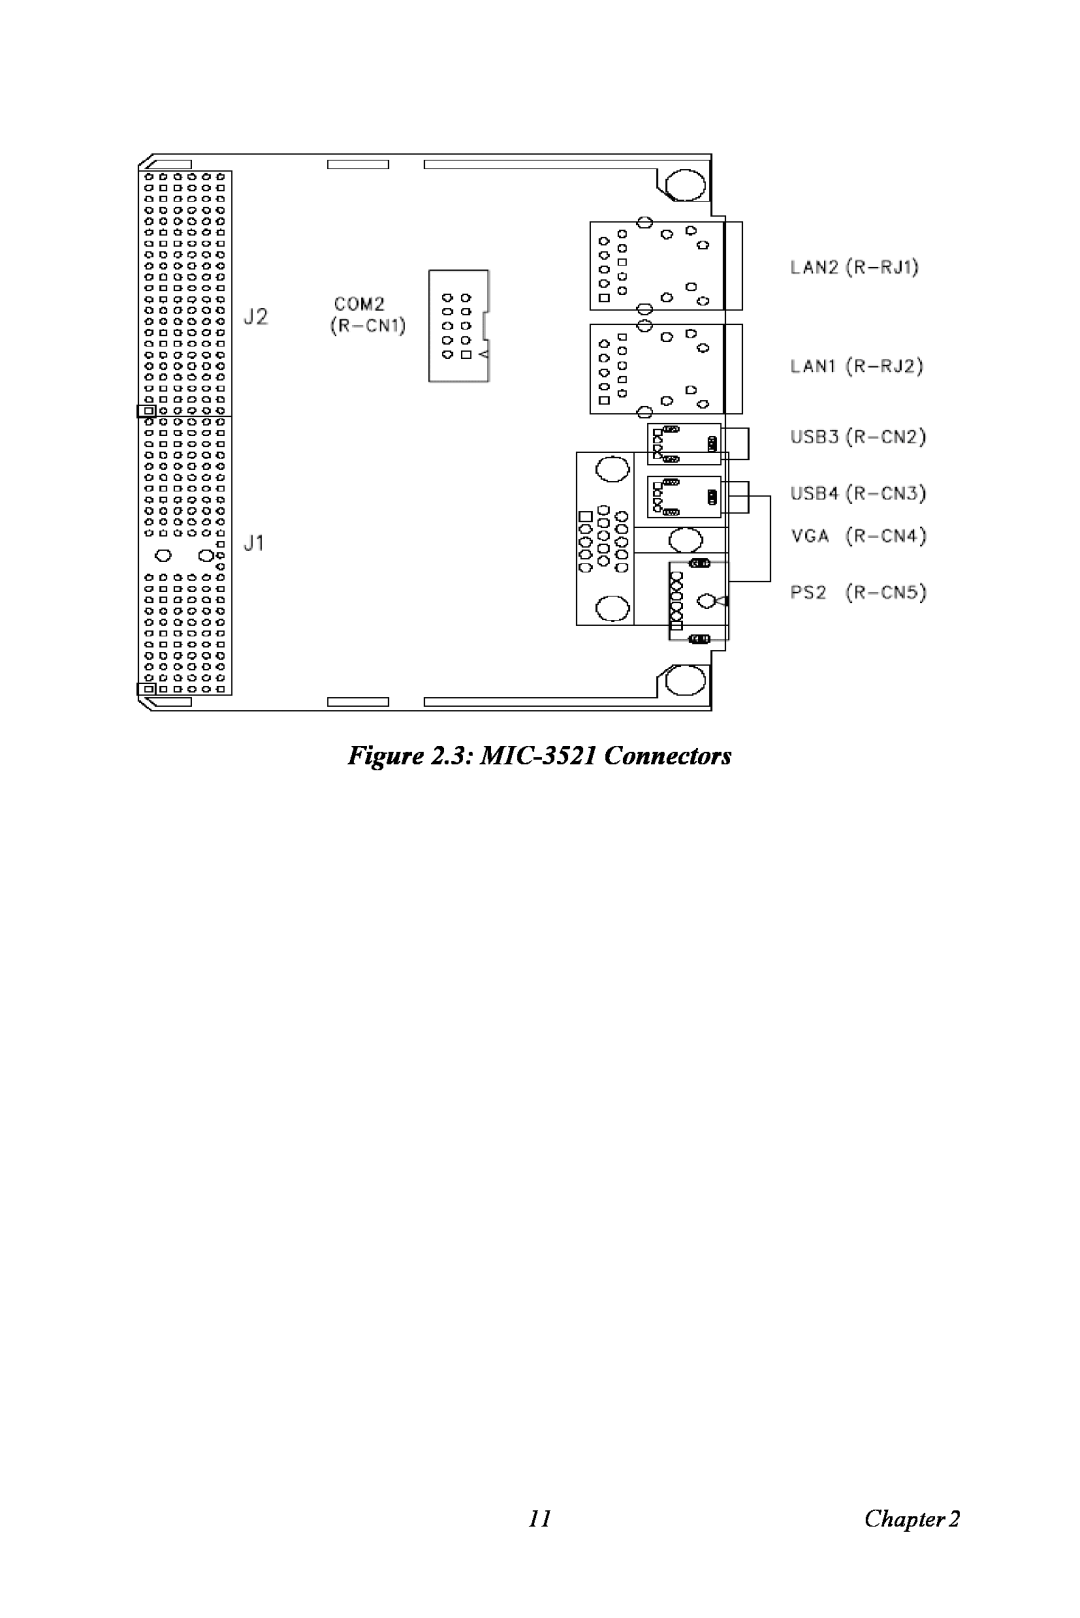 Intel 3U Compact PCI, MIC-3321 user manual 3: MIC-3521Connectors 